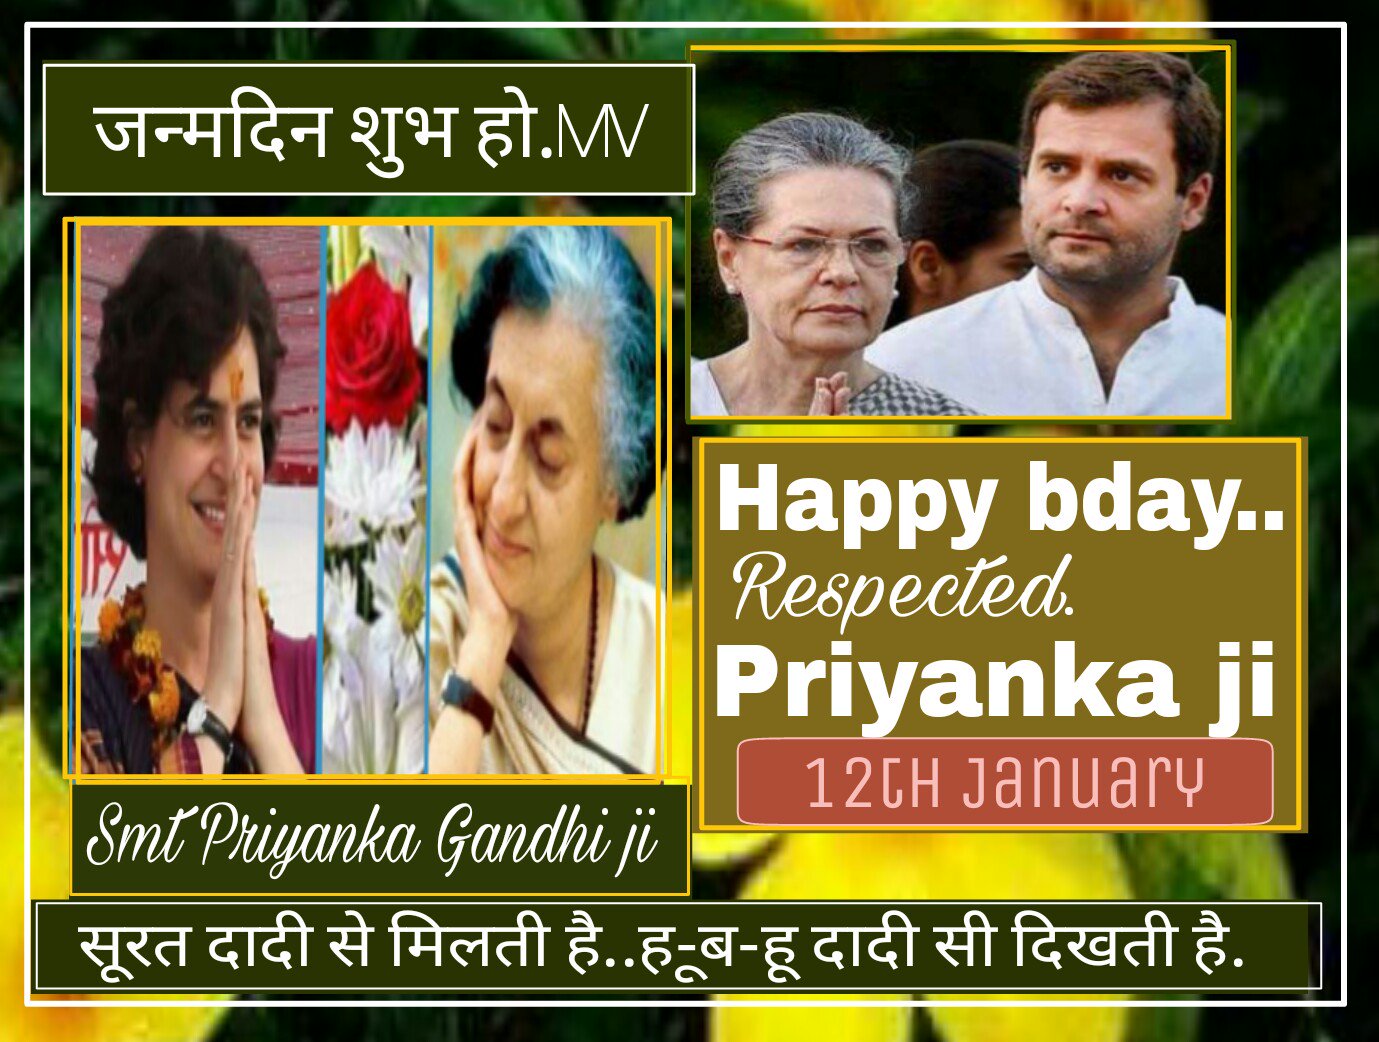 Happy bday.. Respected Priyanka Gandhi ji.12th January.  